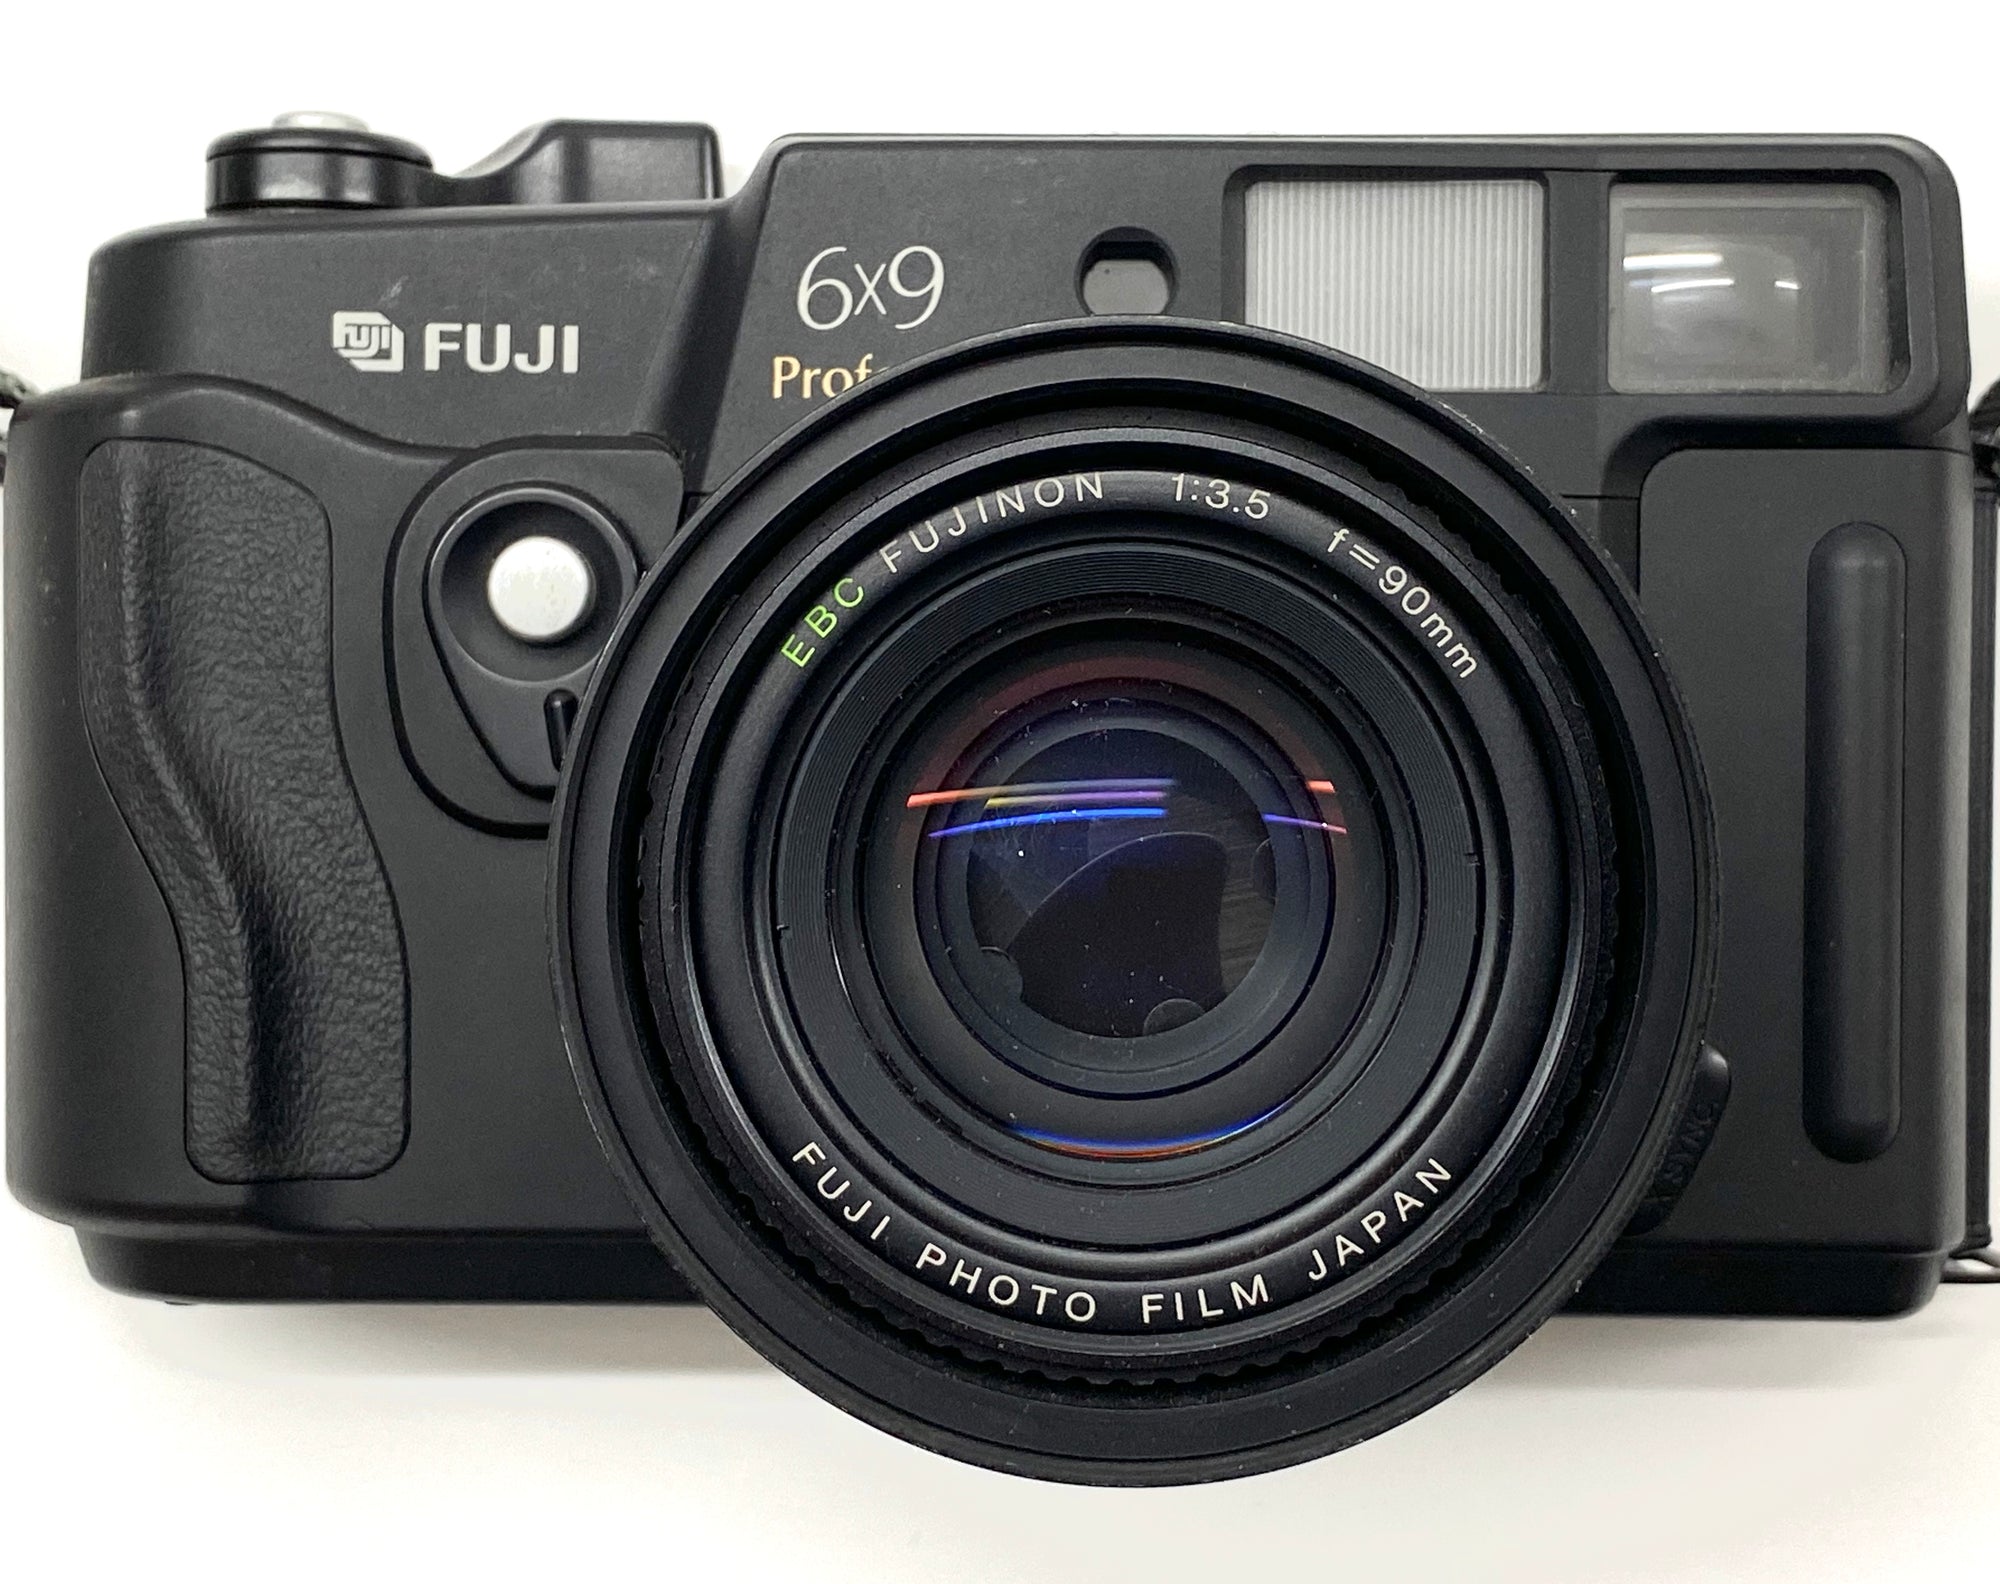 Fuji 6x9 film camera owned by Richard Heeps